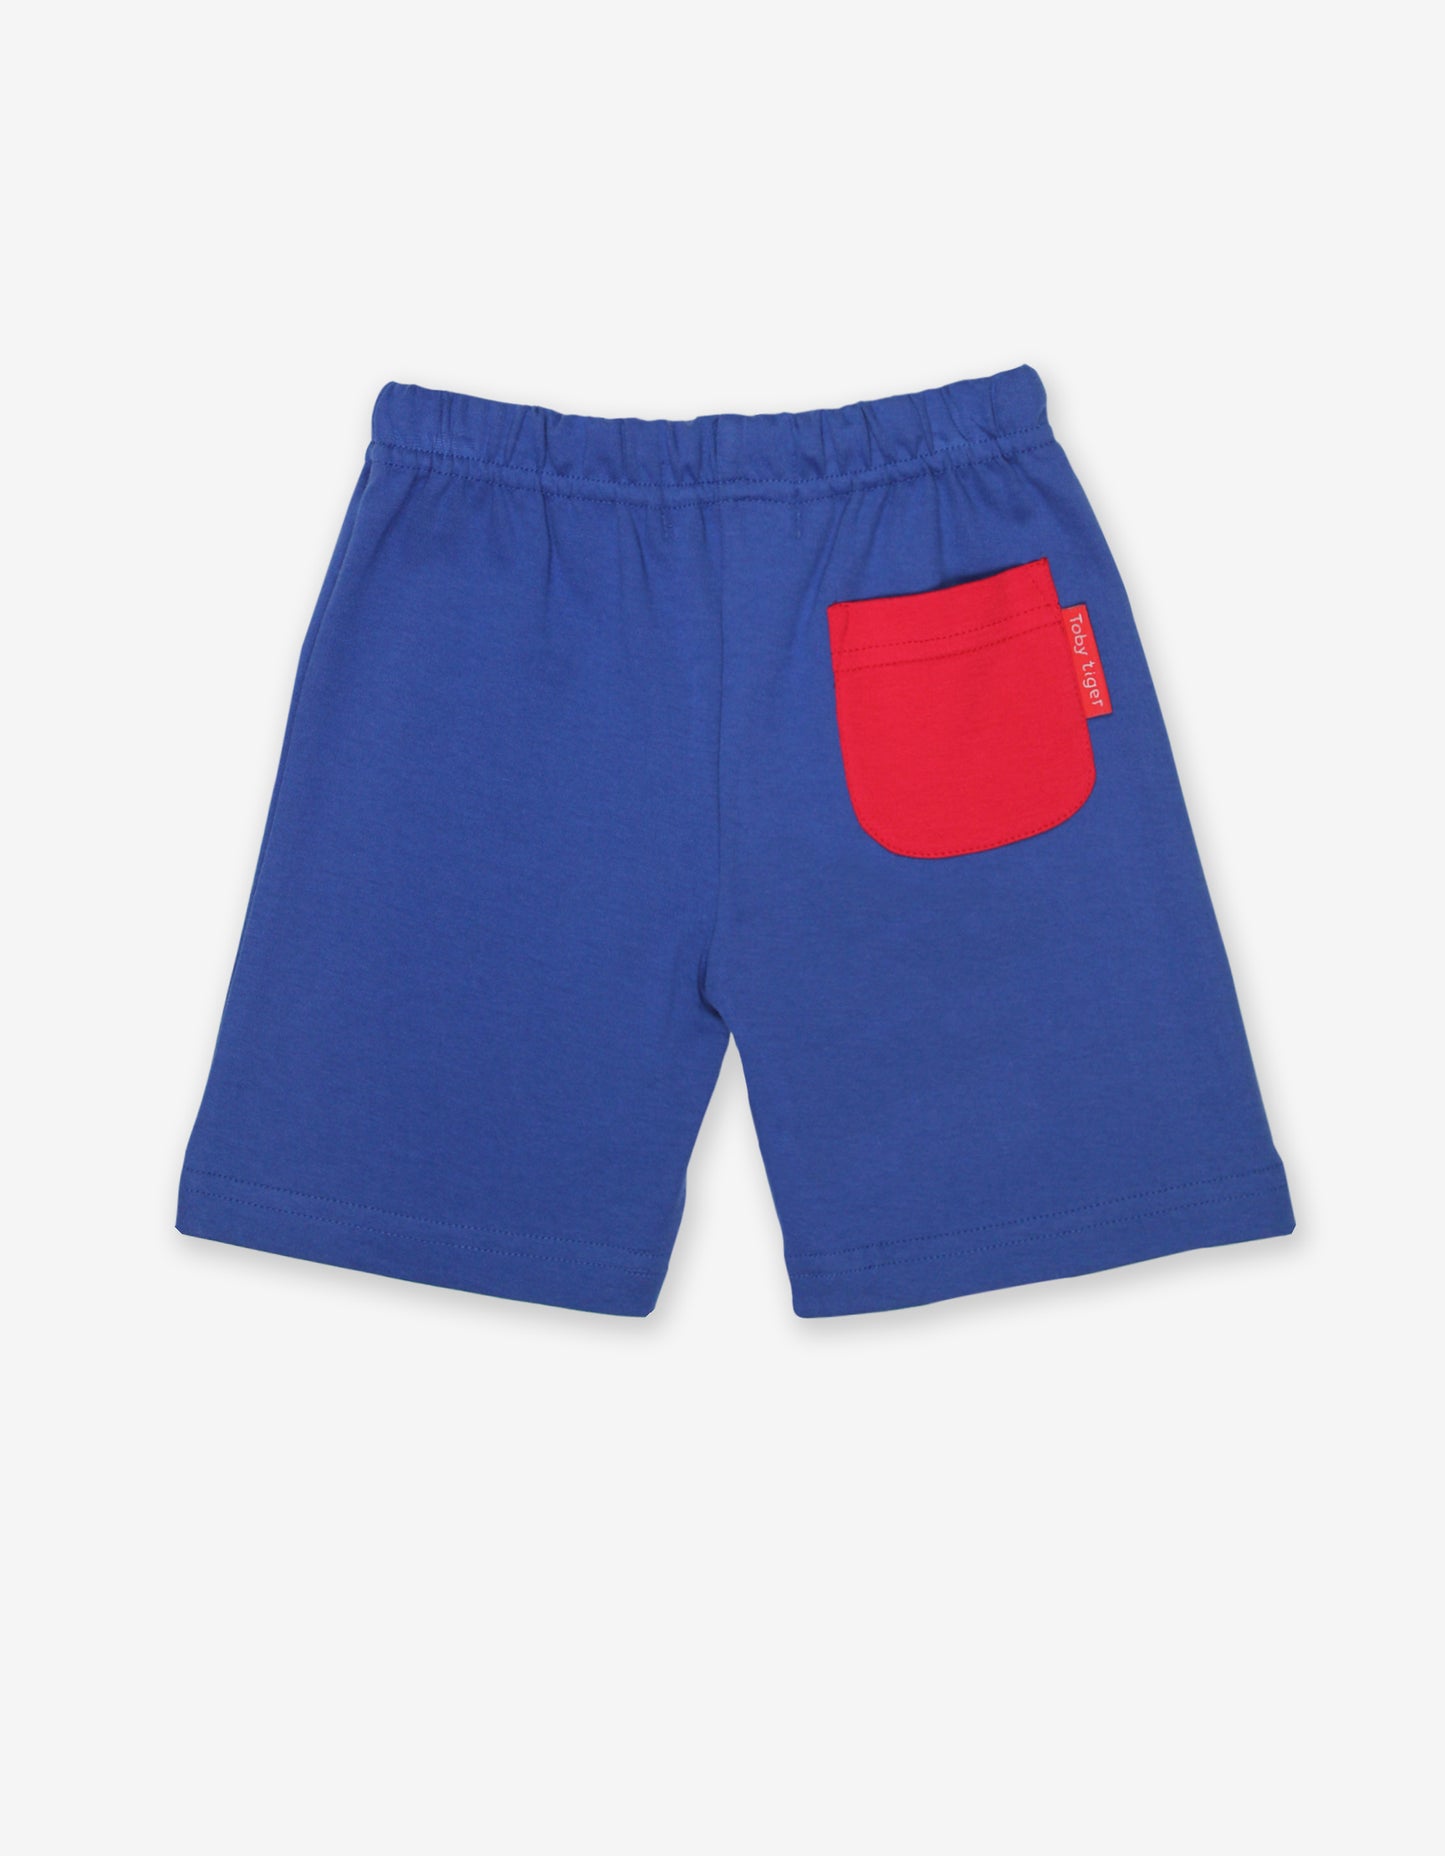 Organic Navy Shorts